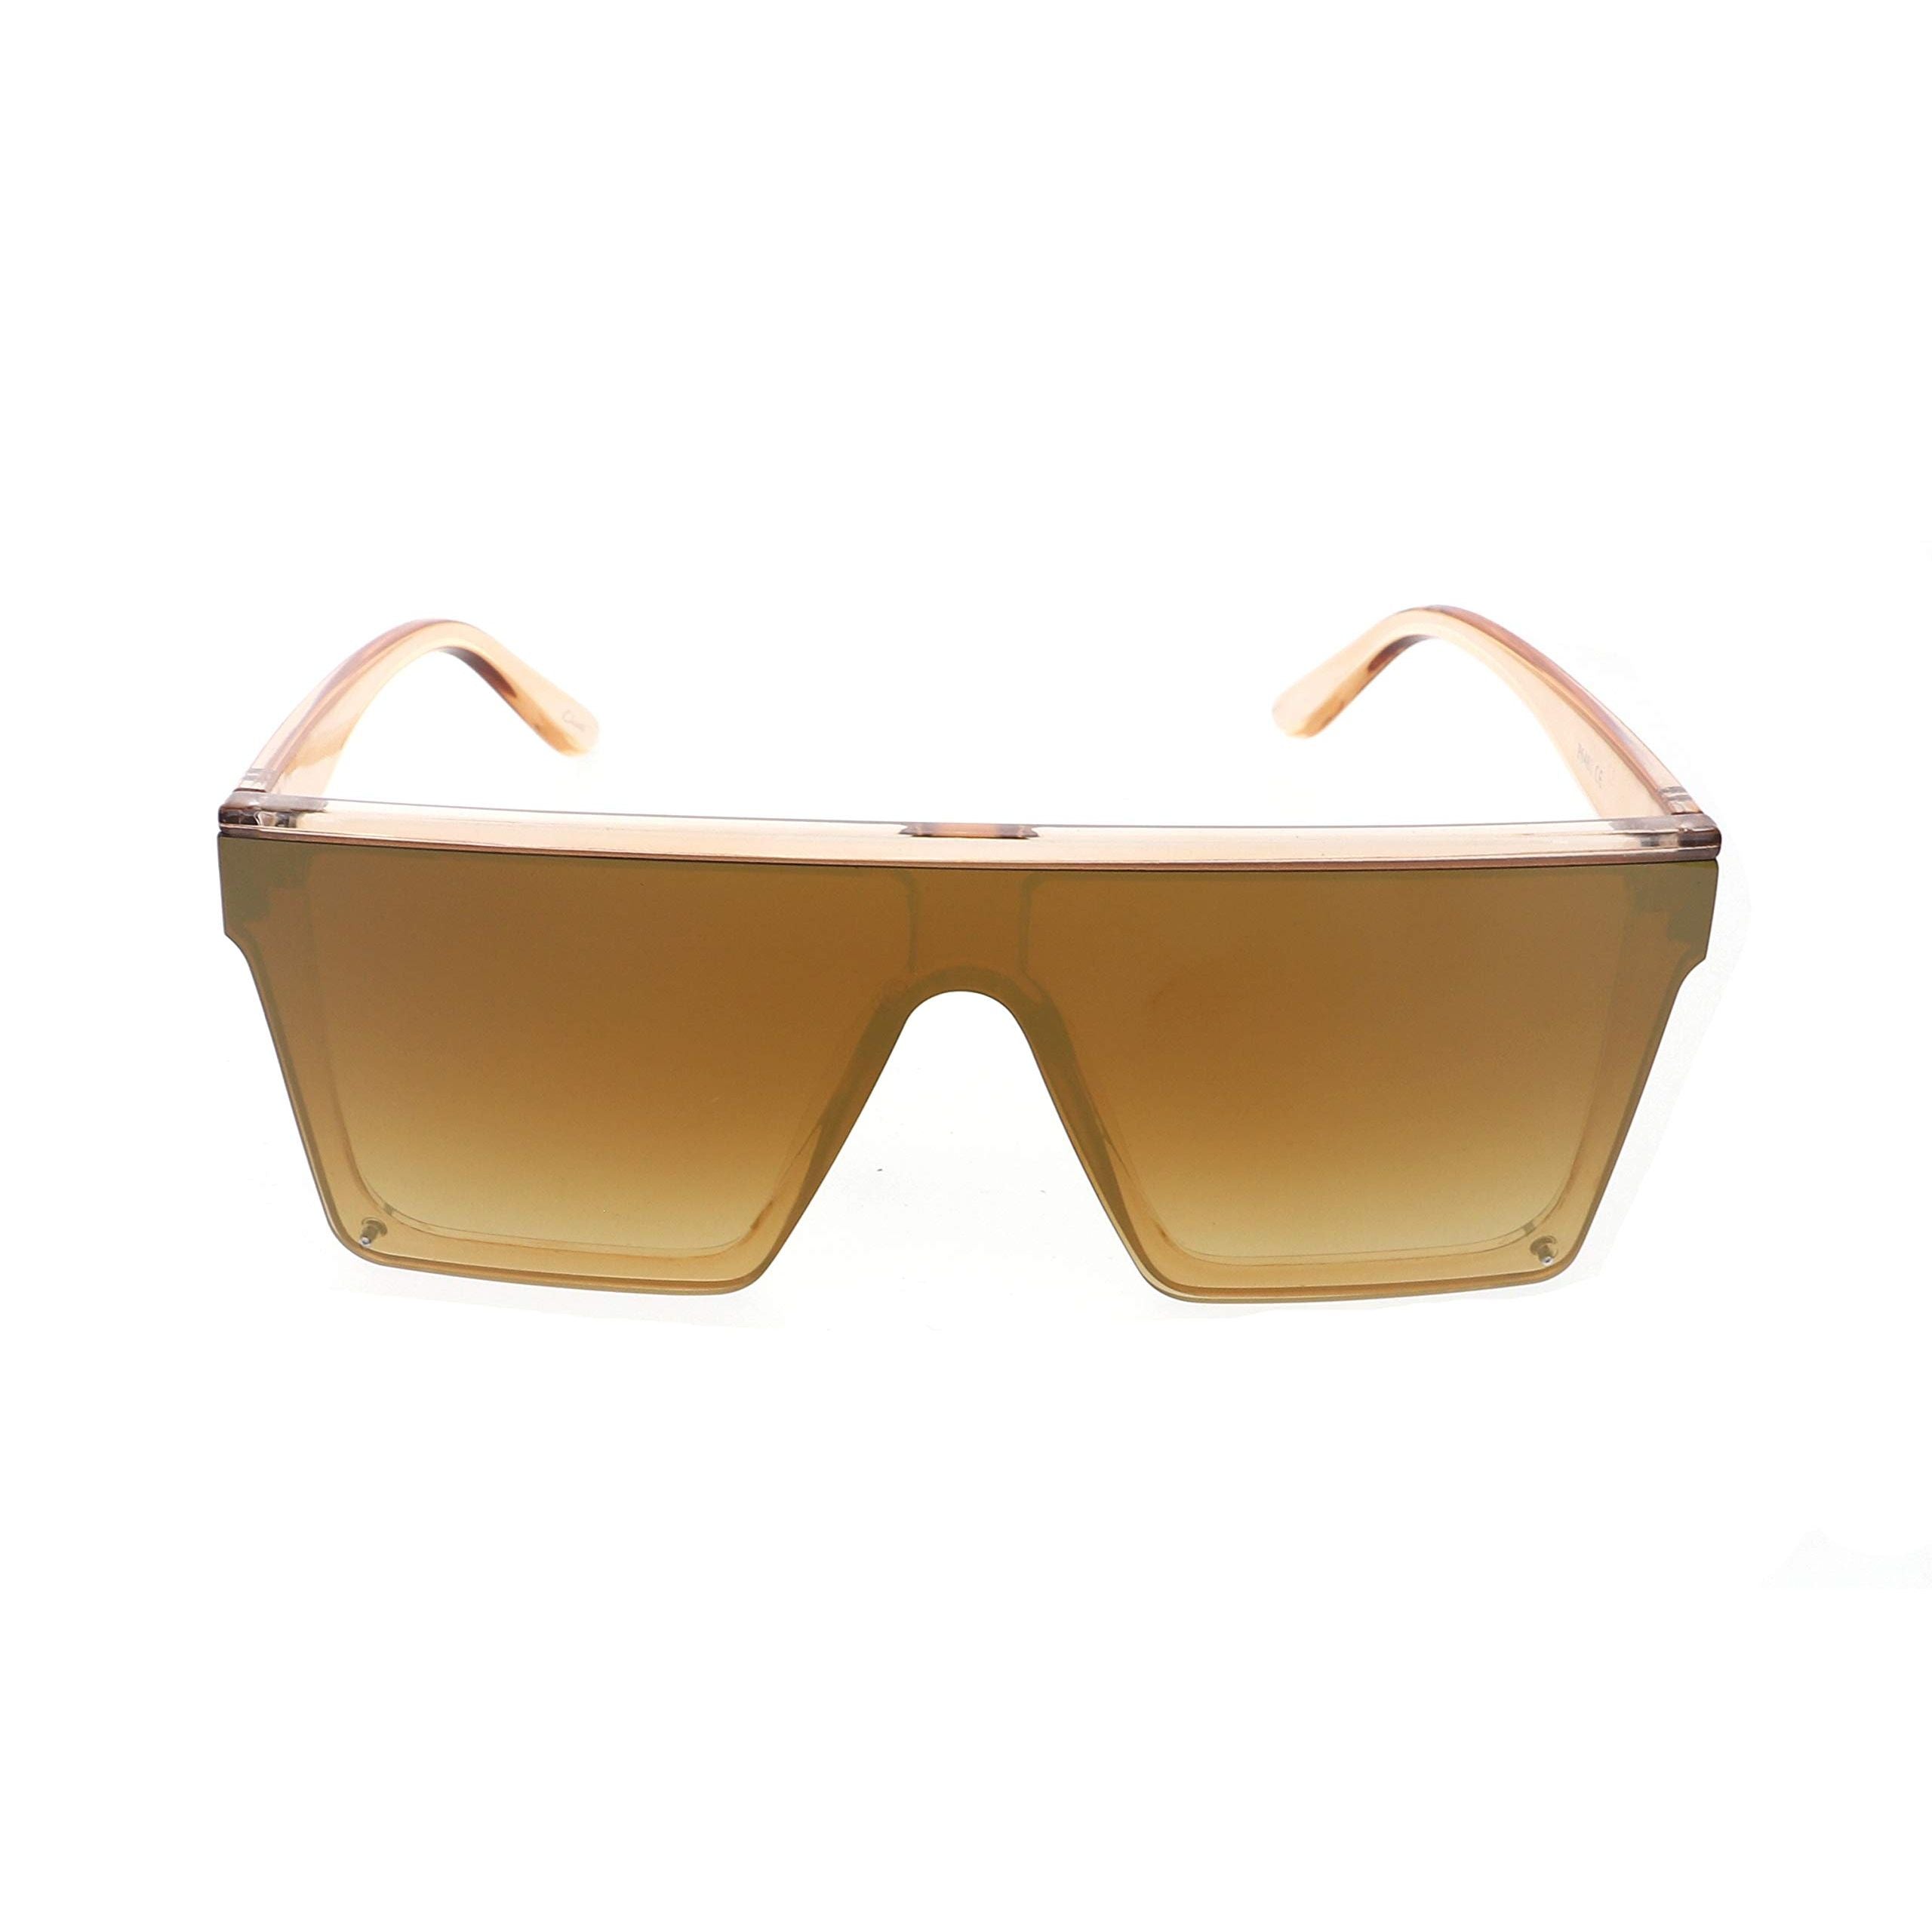 Flatter Top Mirror Oversized Sunglasses - Lush Crate Eyewear Flatter - Red